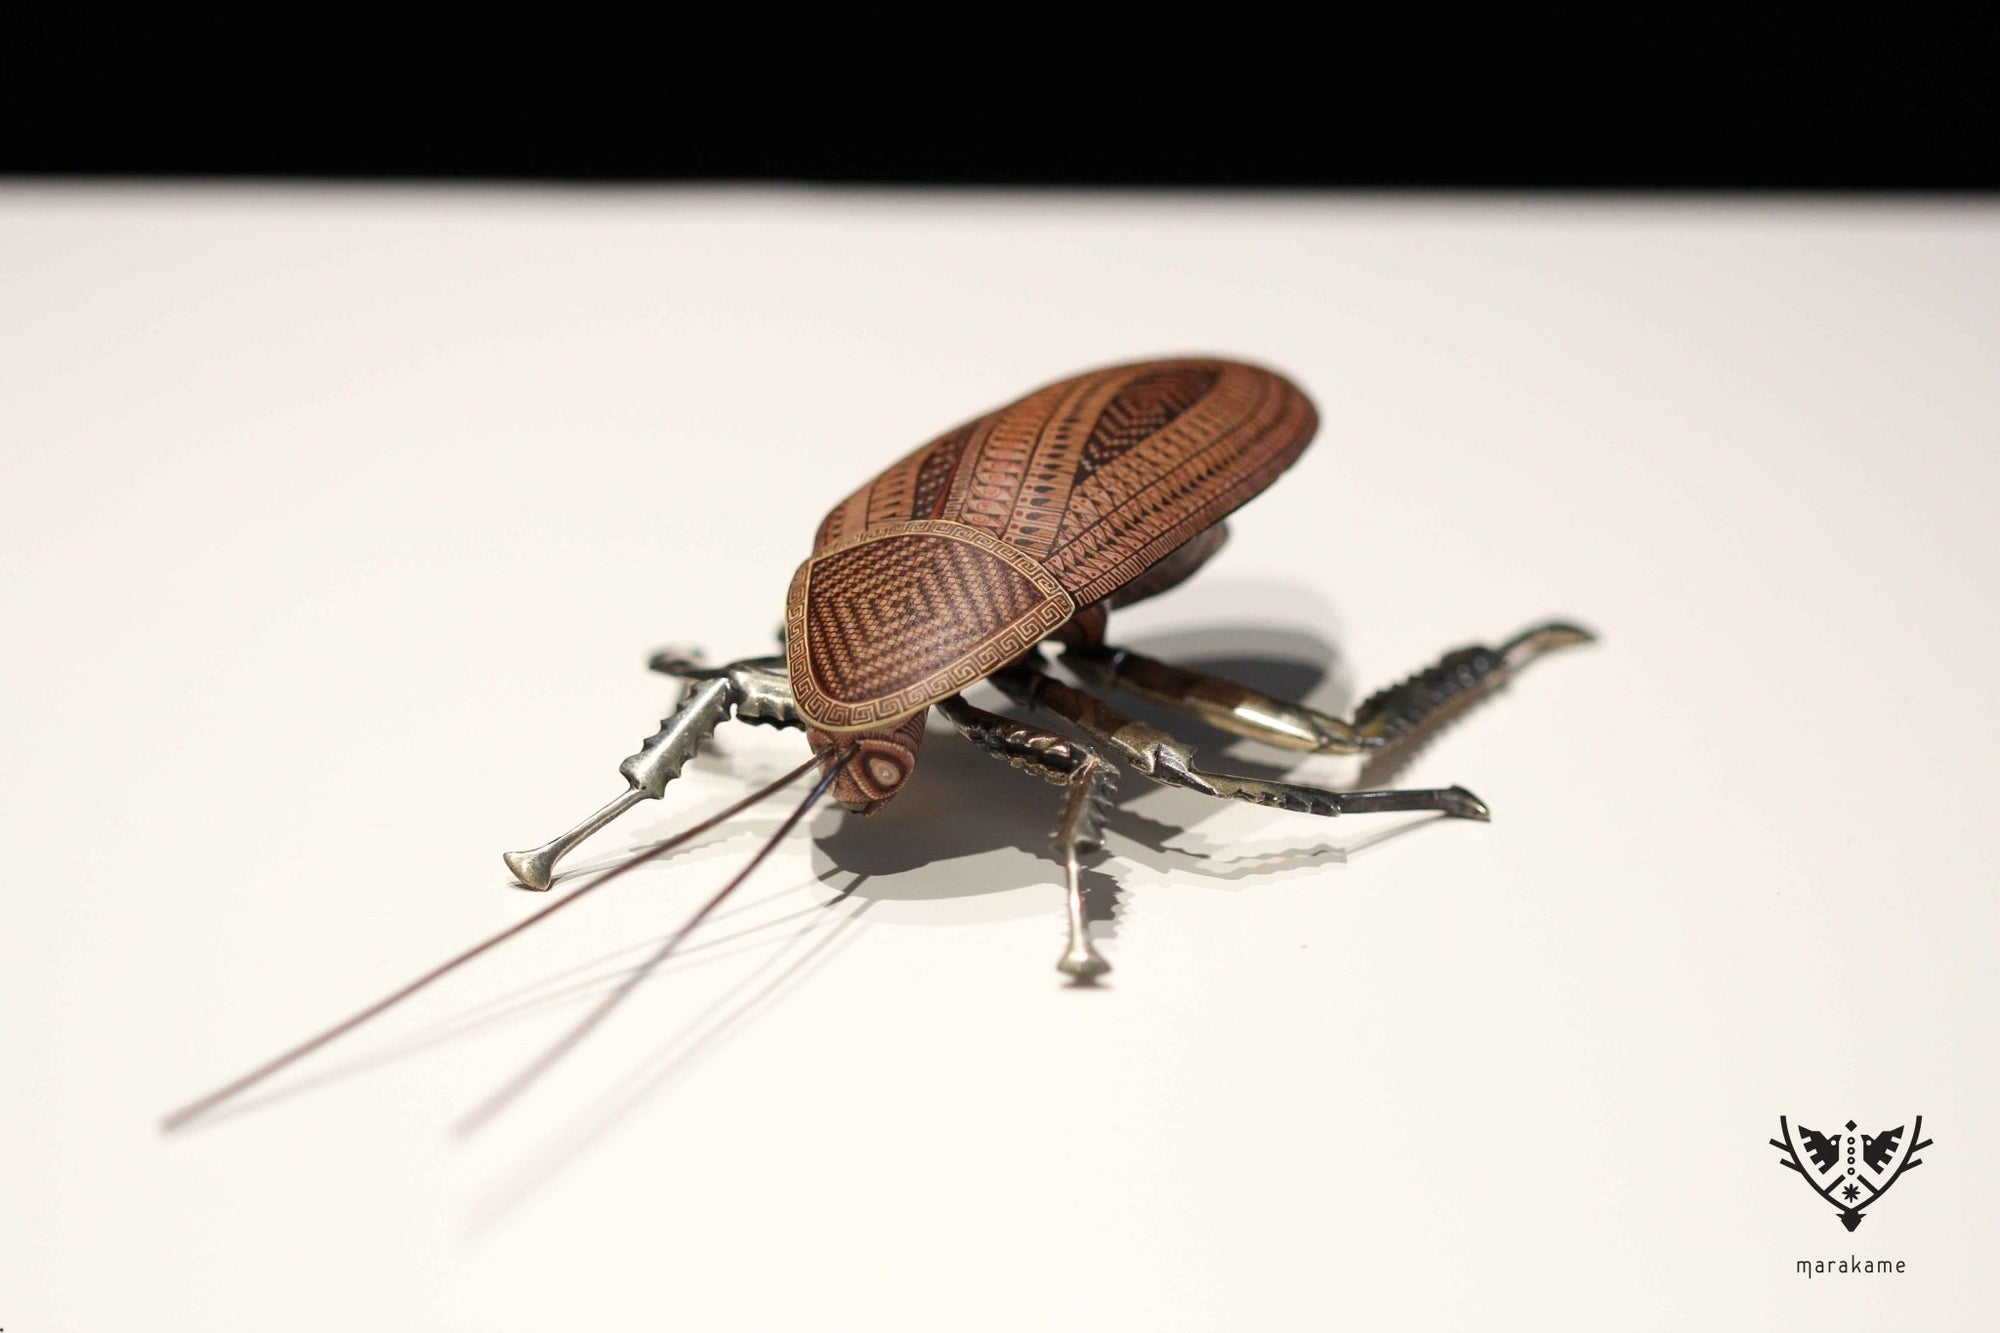 Cockroach - Mani 'V - Huichol Art - Marakame